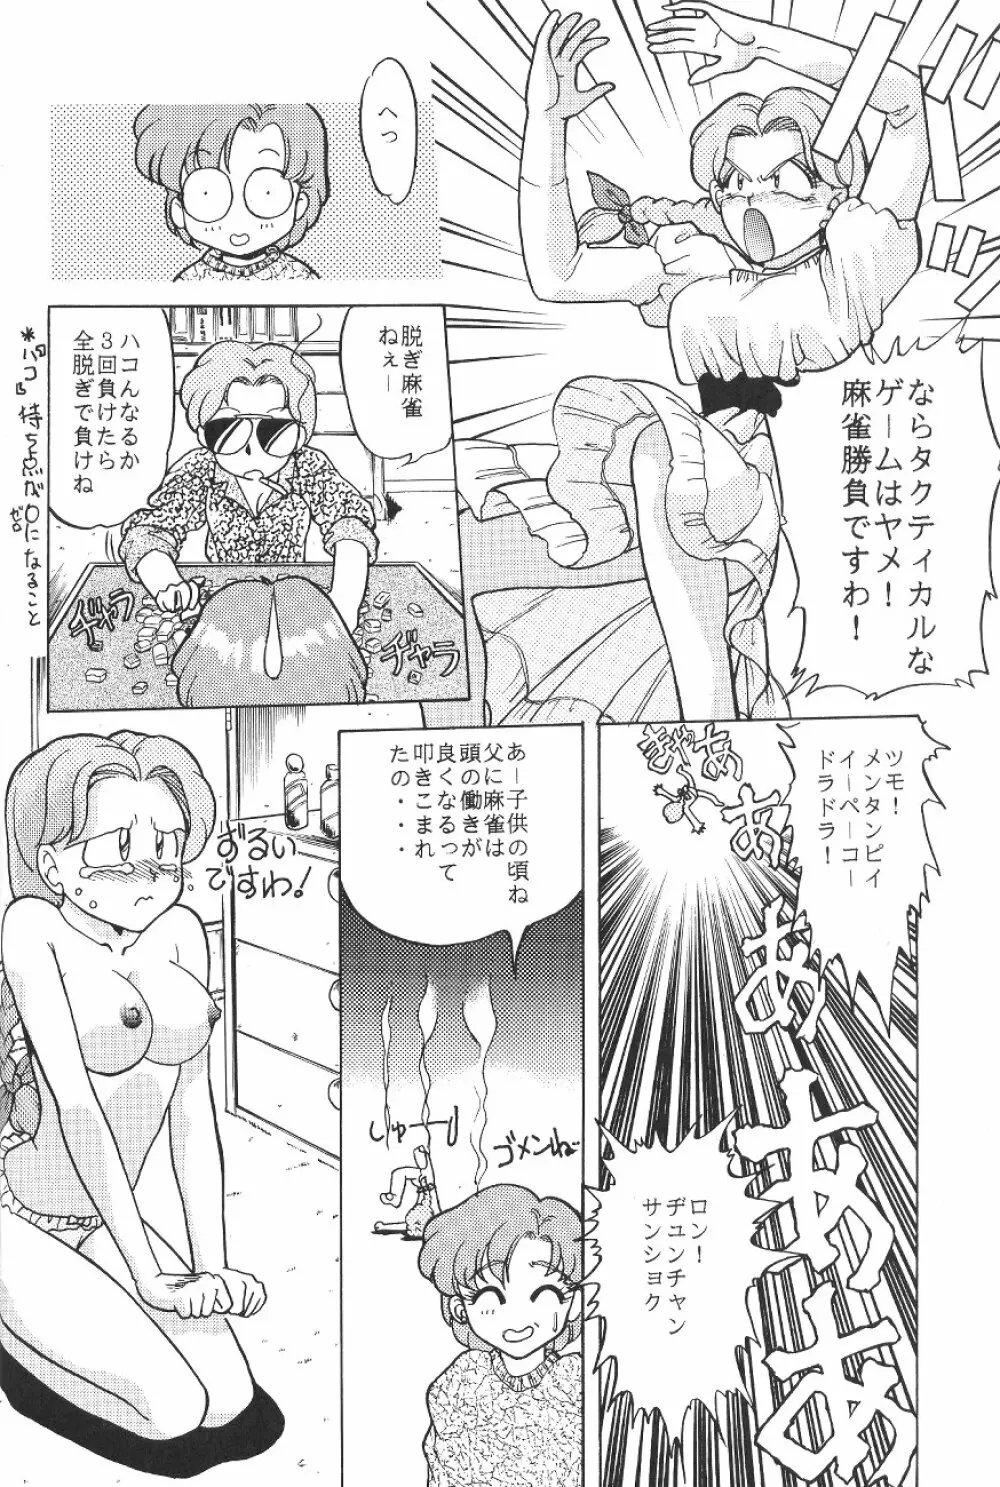 KATZE 7 下巻 - page22